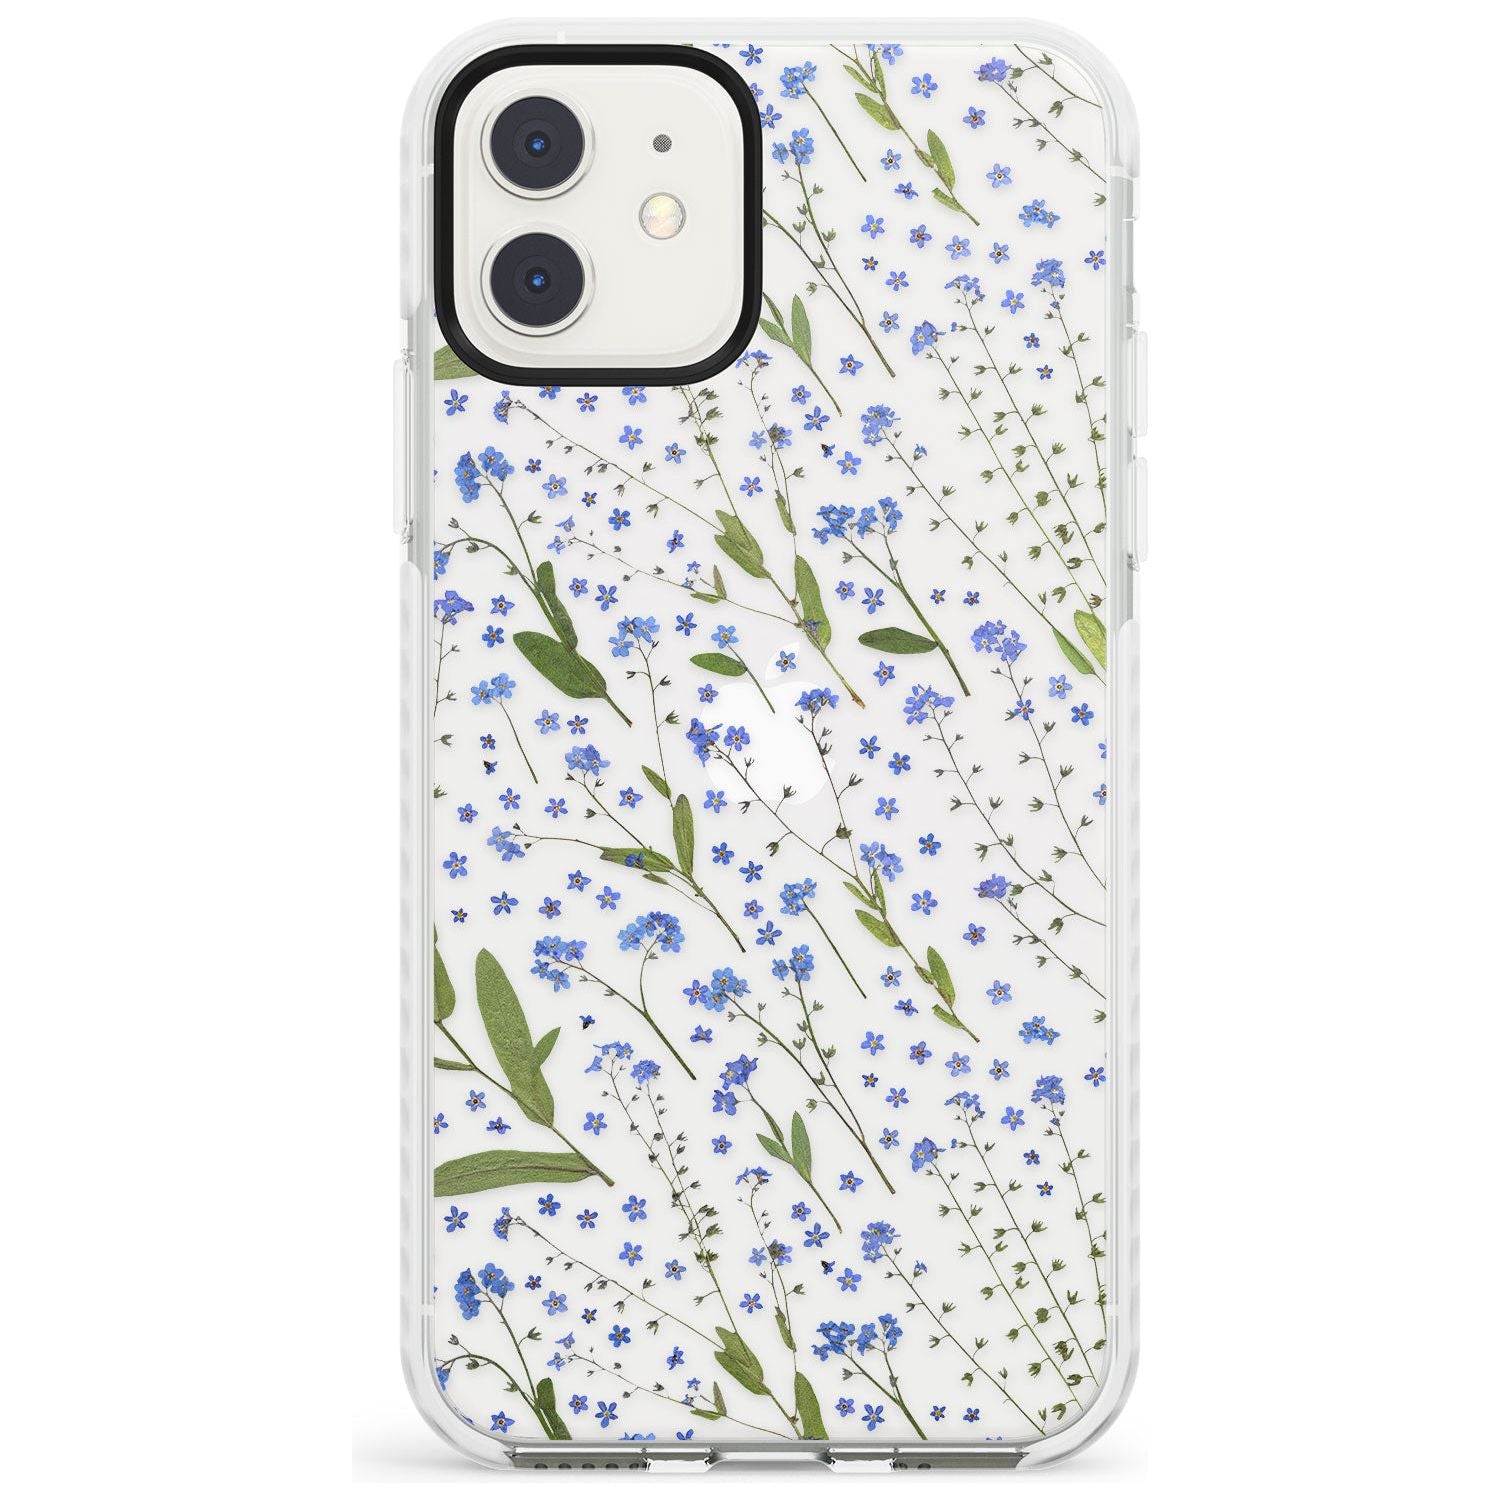 Blue Wild Flower Design Impact Phone Case for iPhone 11